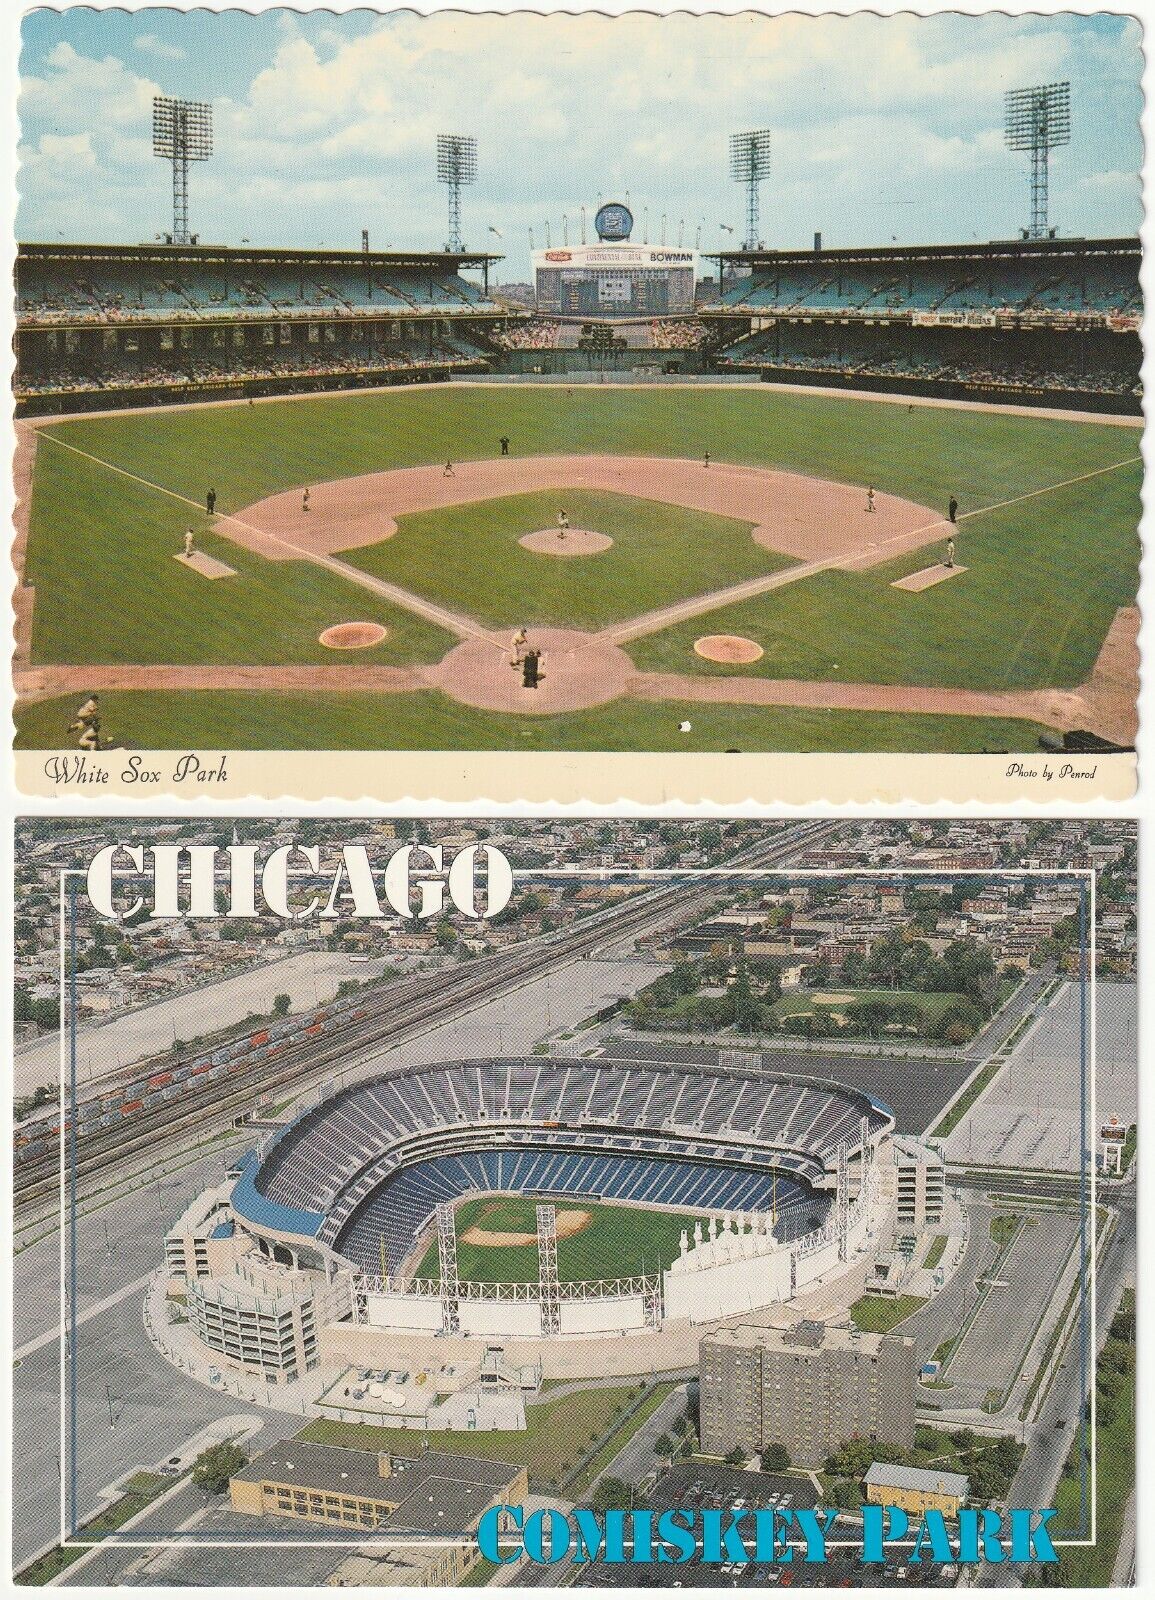 Chicago White Sox Comiskey Park Baseball Stadium Postcards - Then & Now